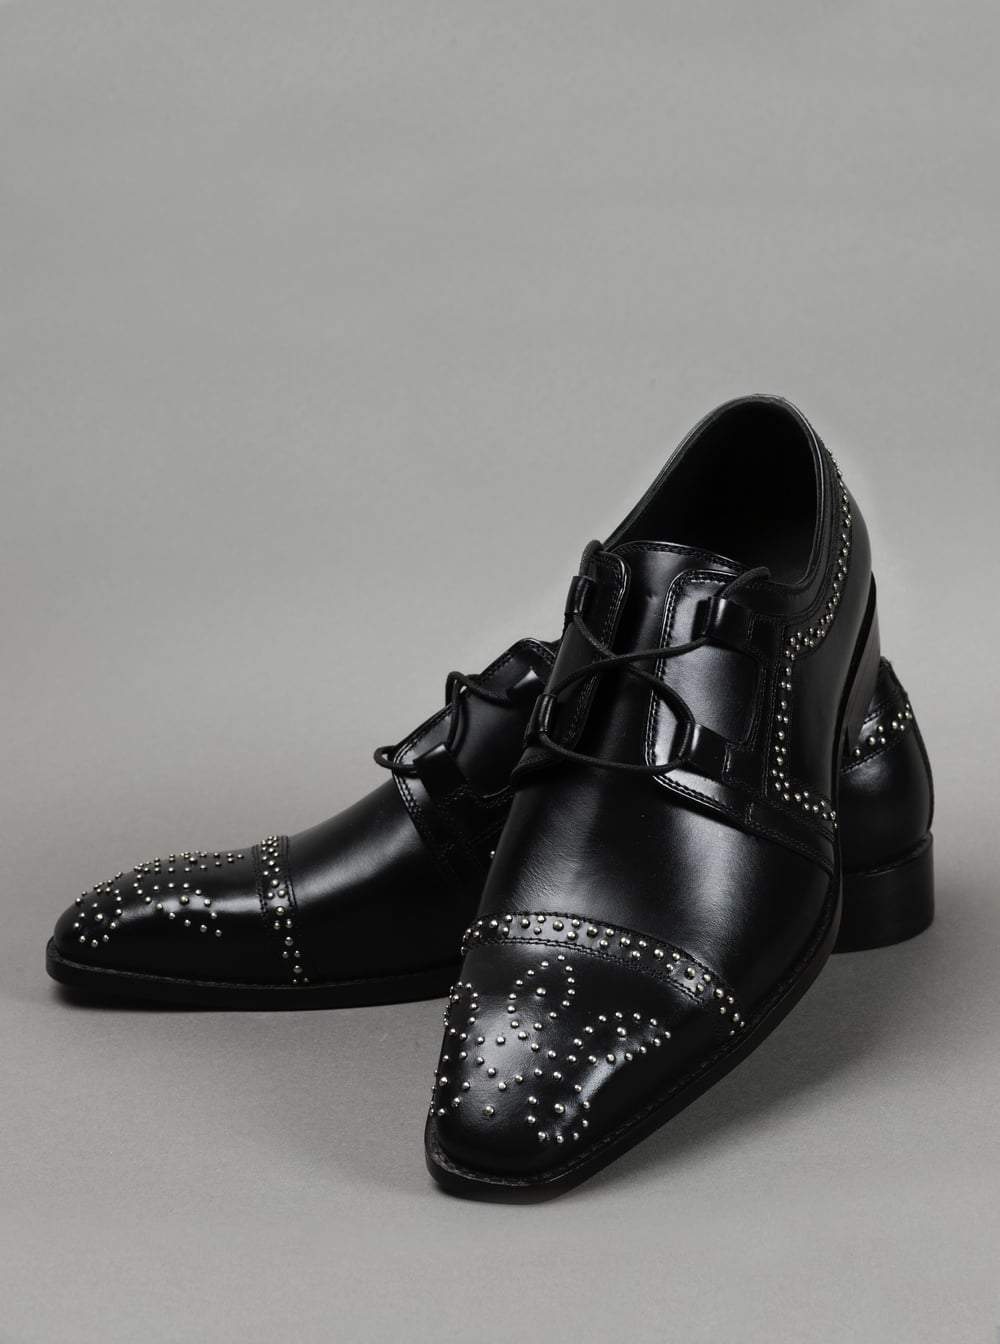 Black Bespoke Shoes